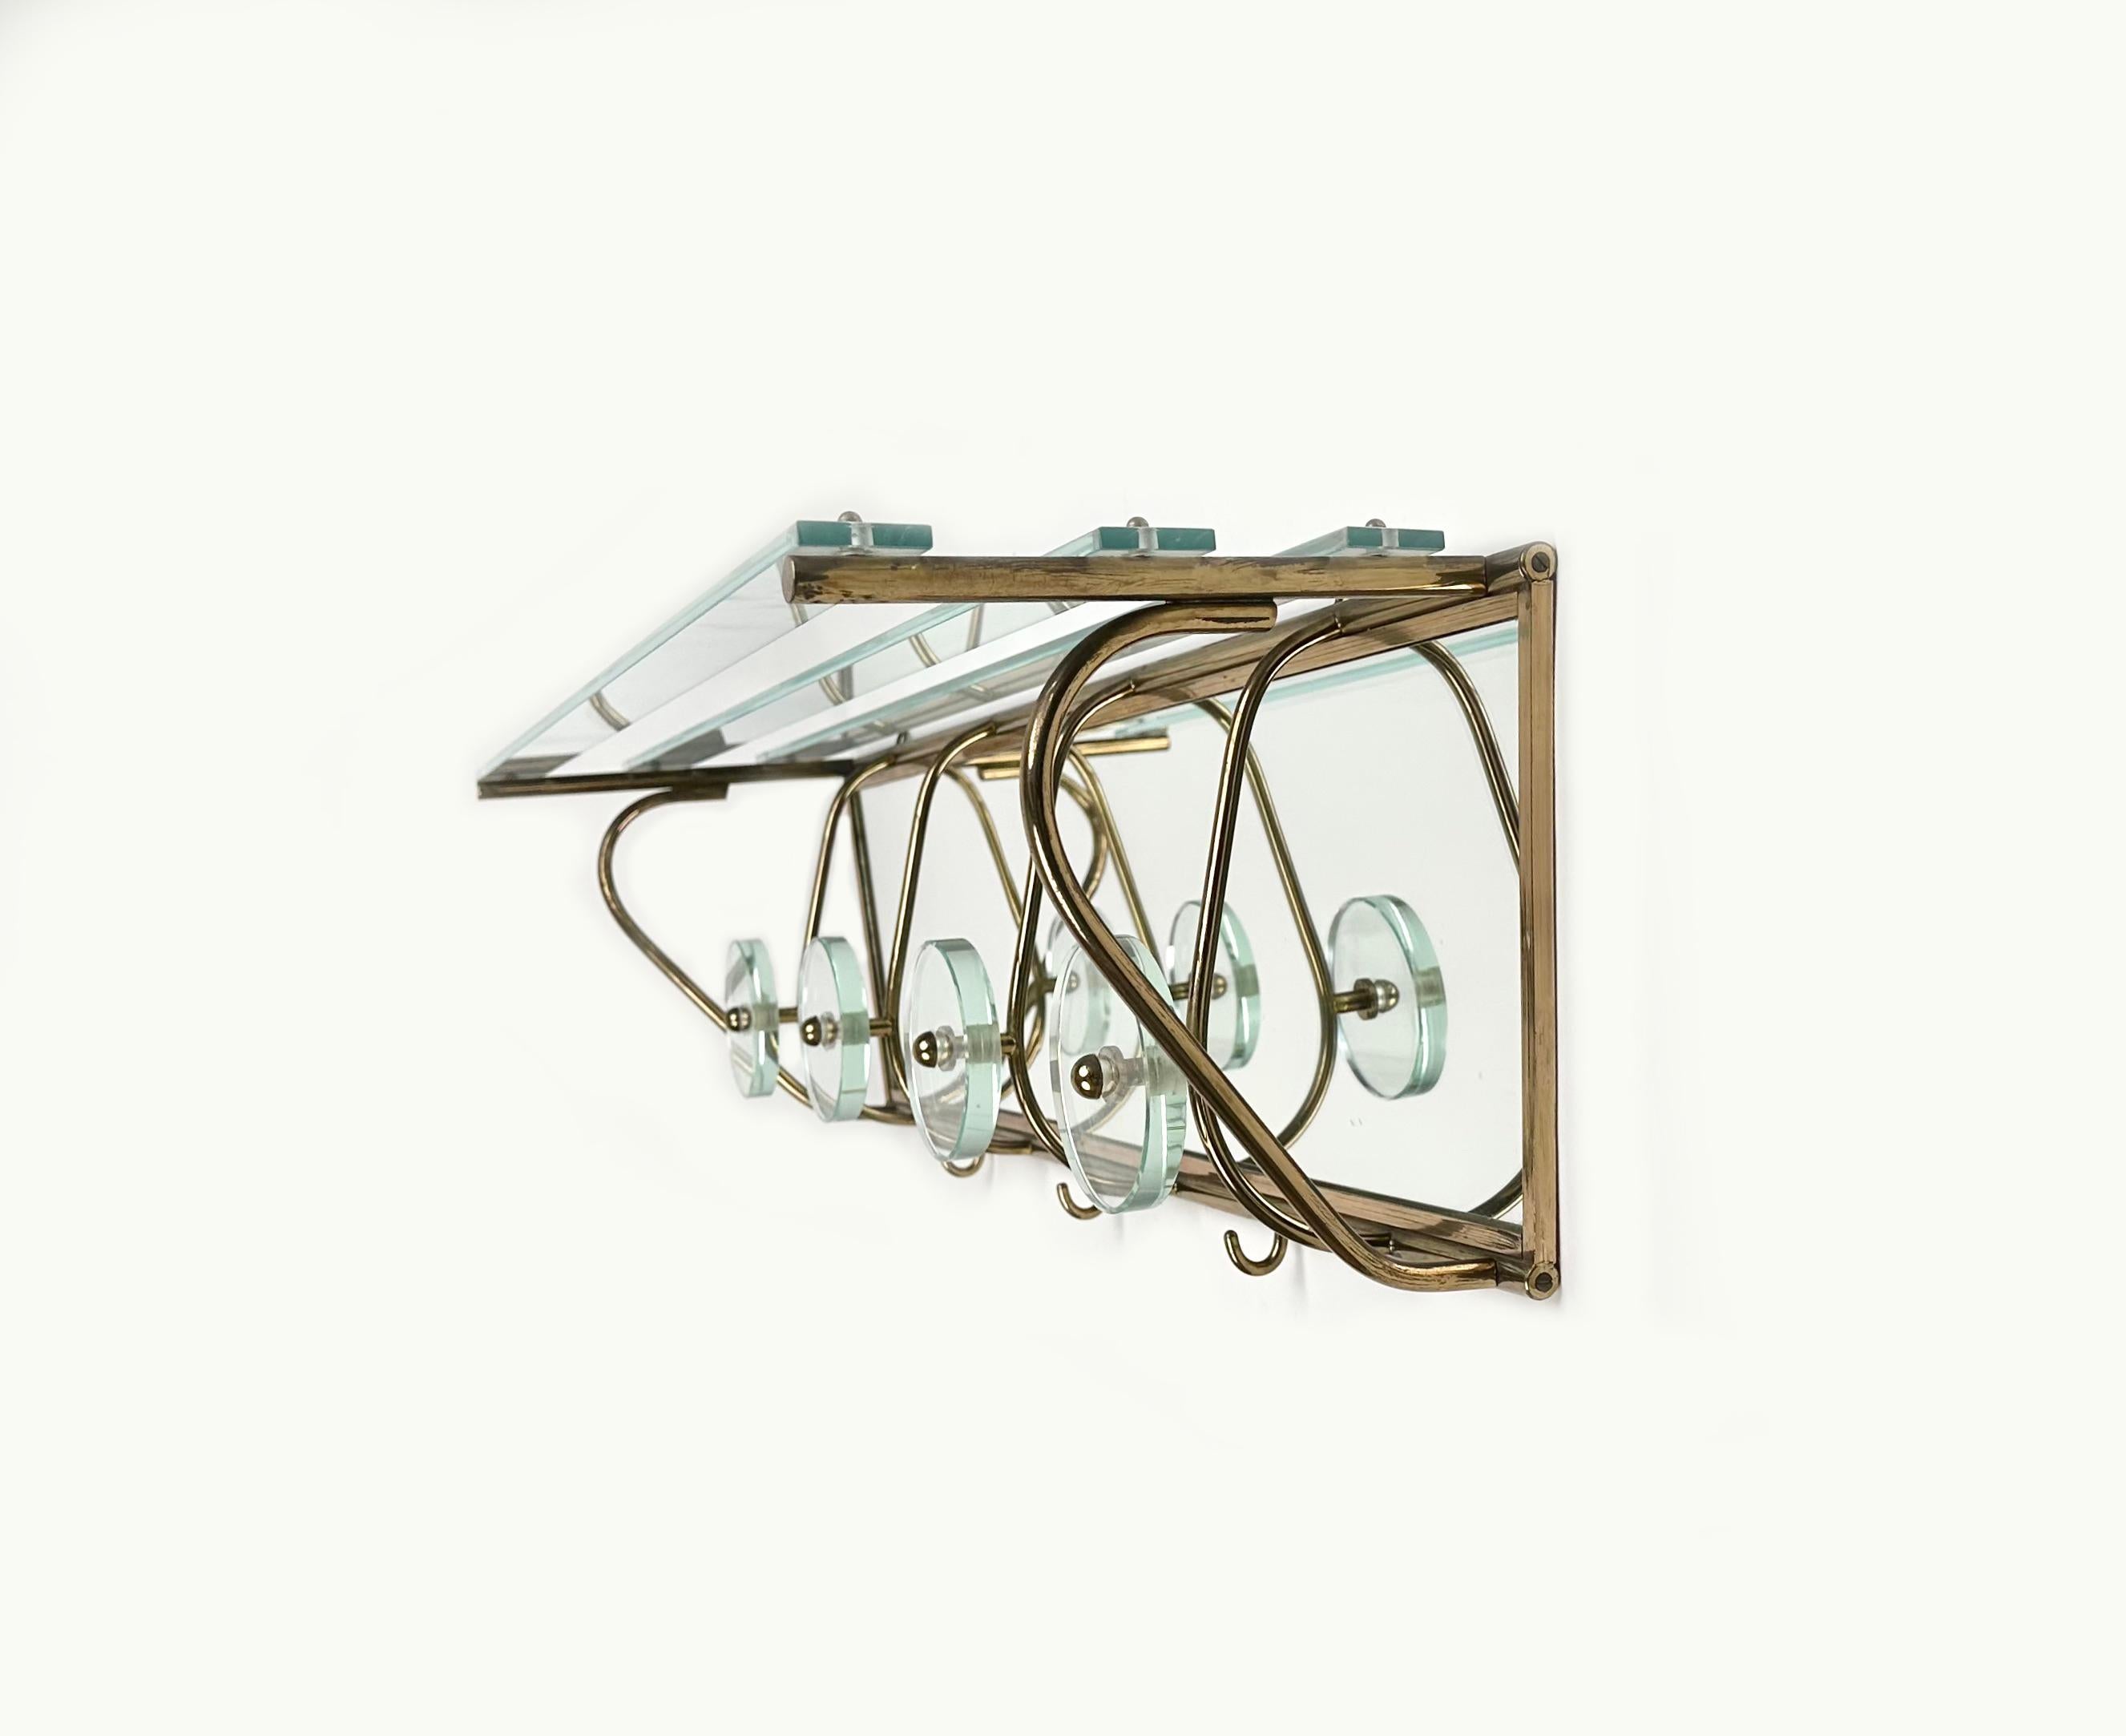 Metal Coat Rack Shelf in Mirror, Brass and Glass Fontana Arte style, Italy 1950s